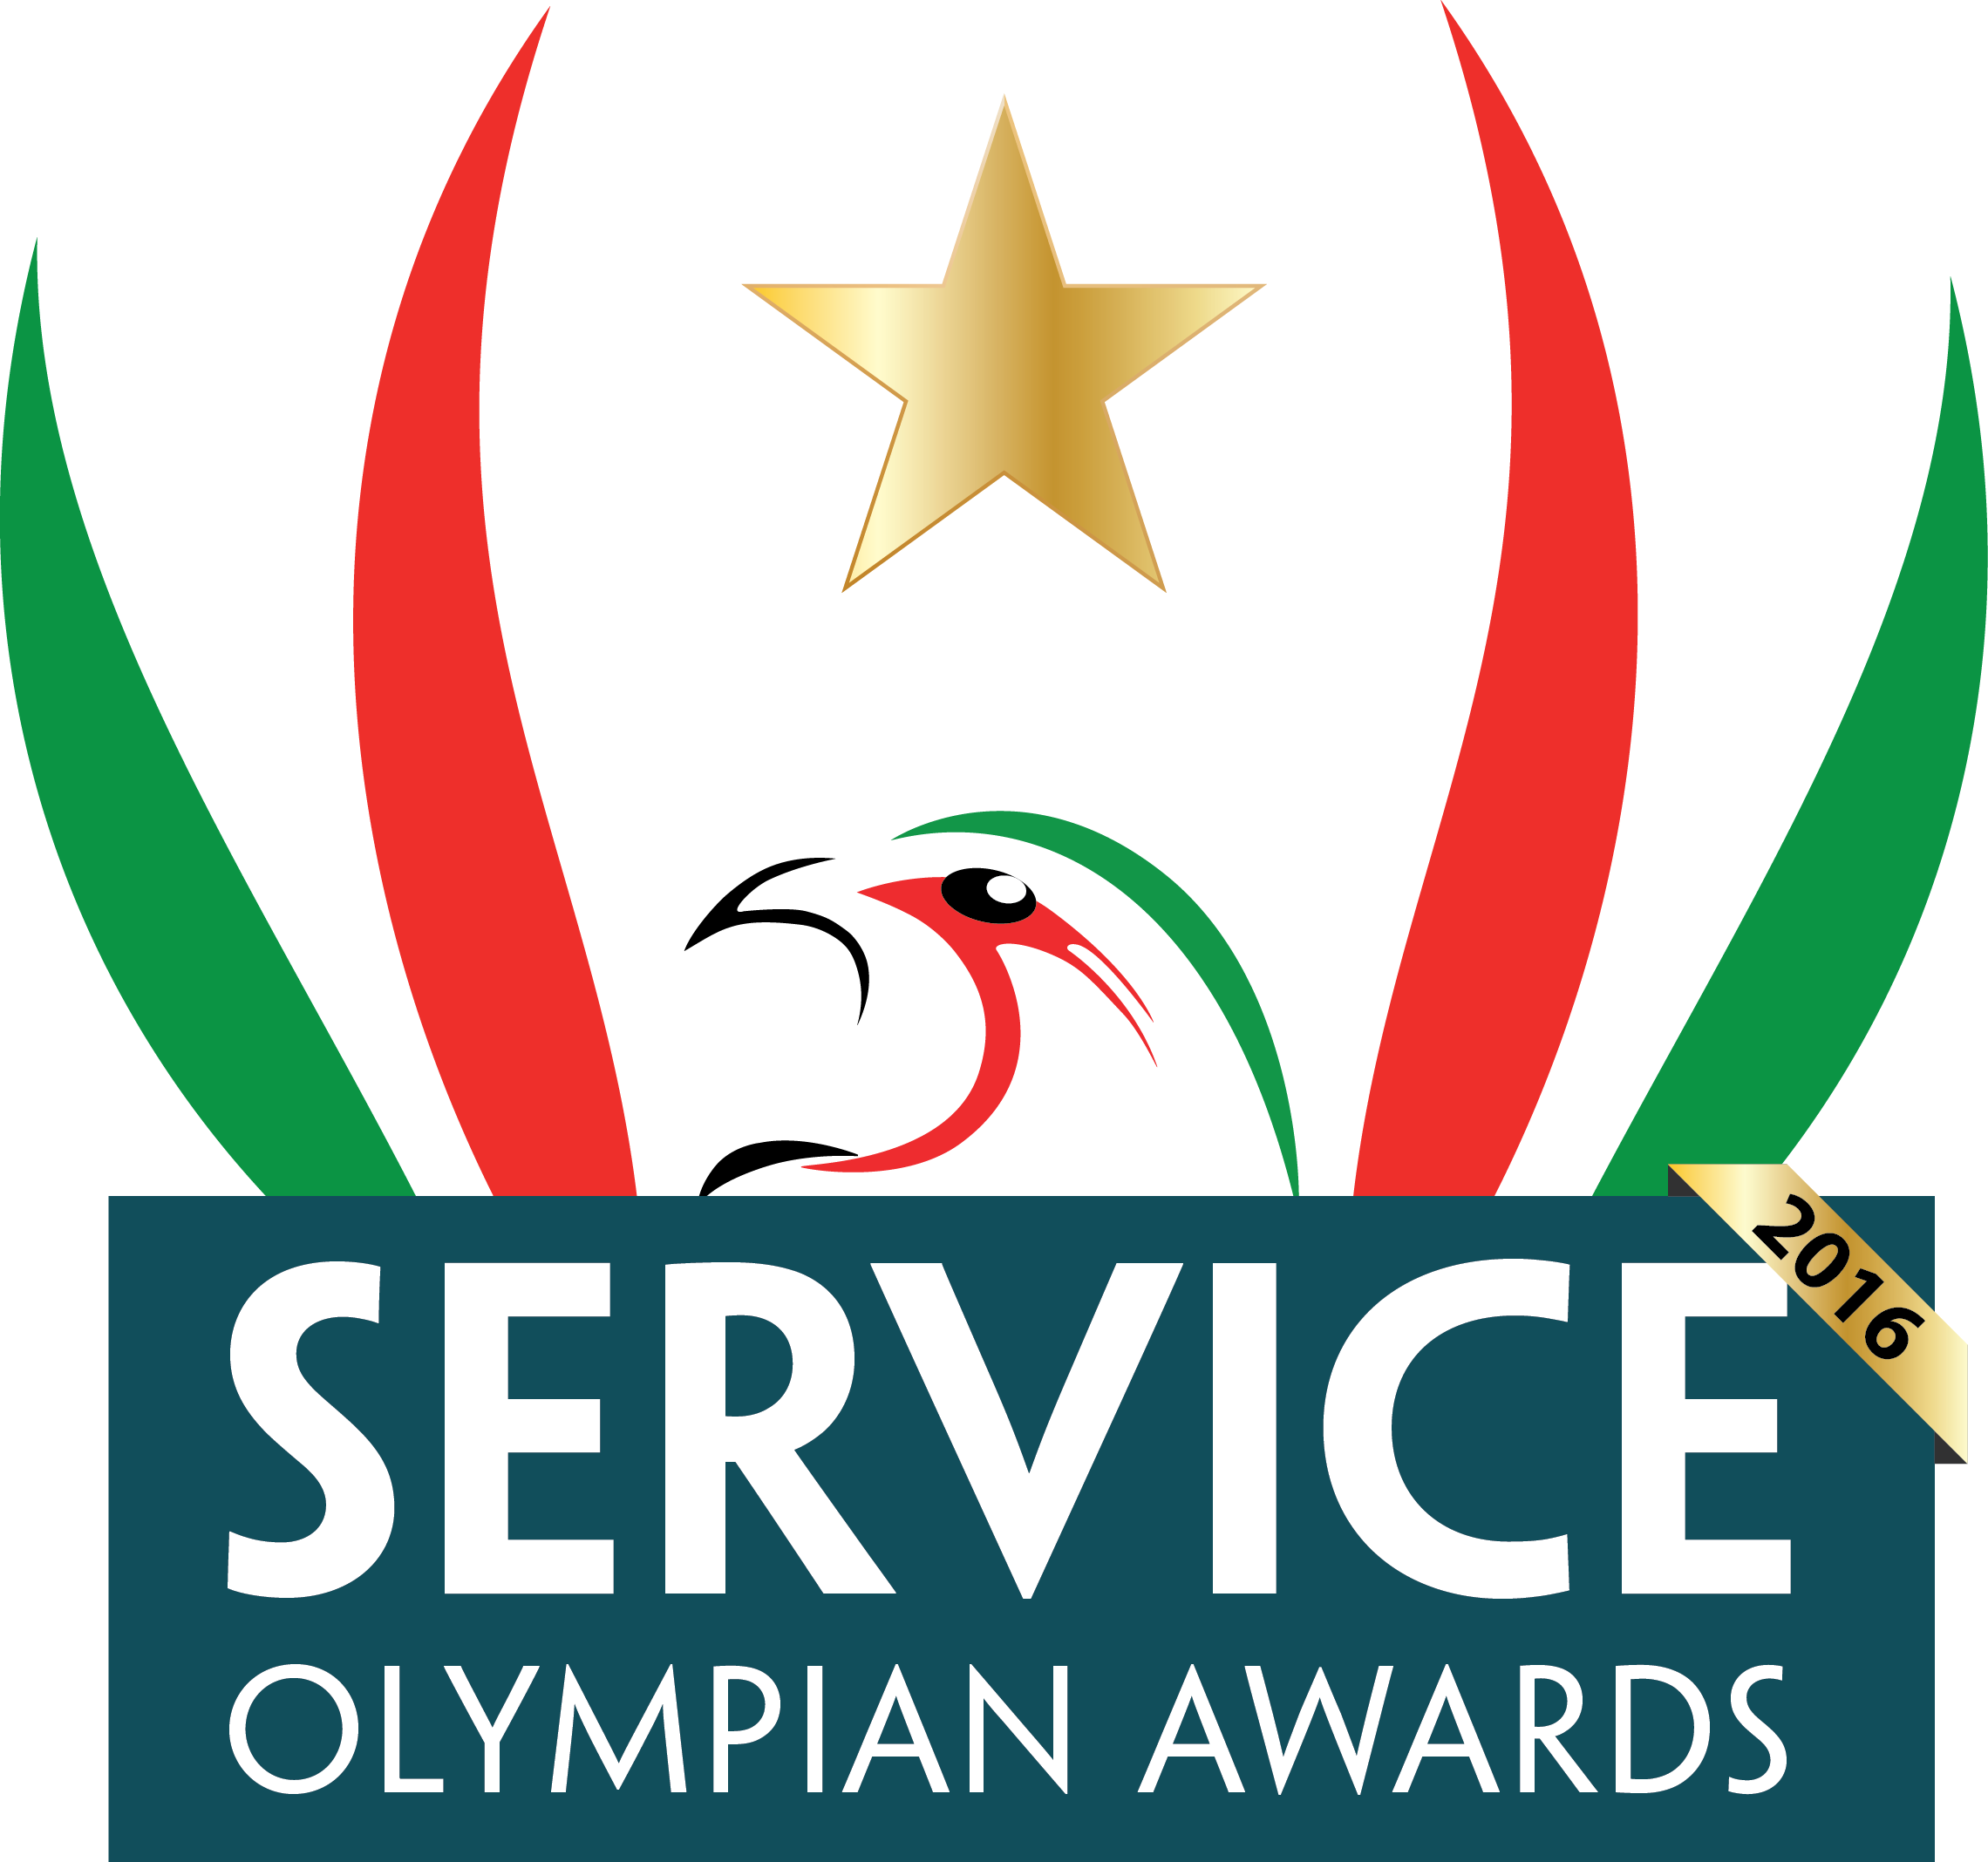 Service Olympian Award 2017 - Customer Service Week 2013 (2280x2136)